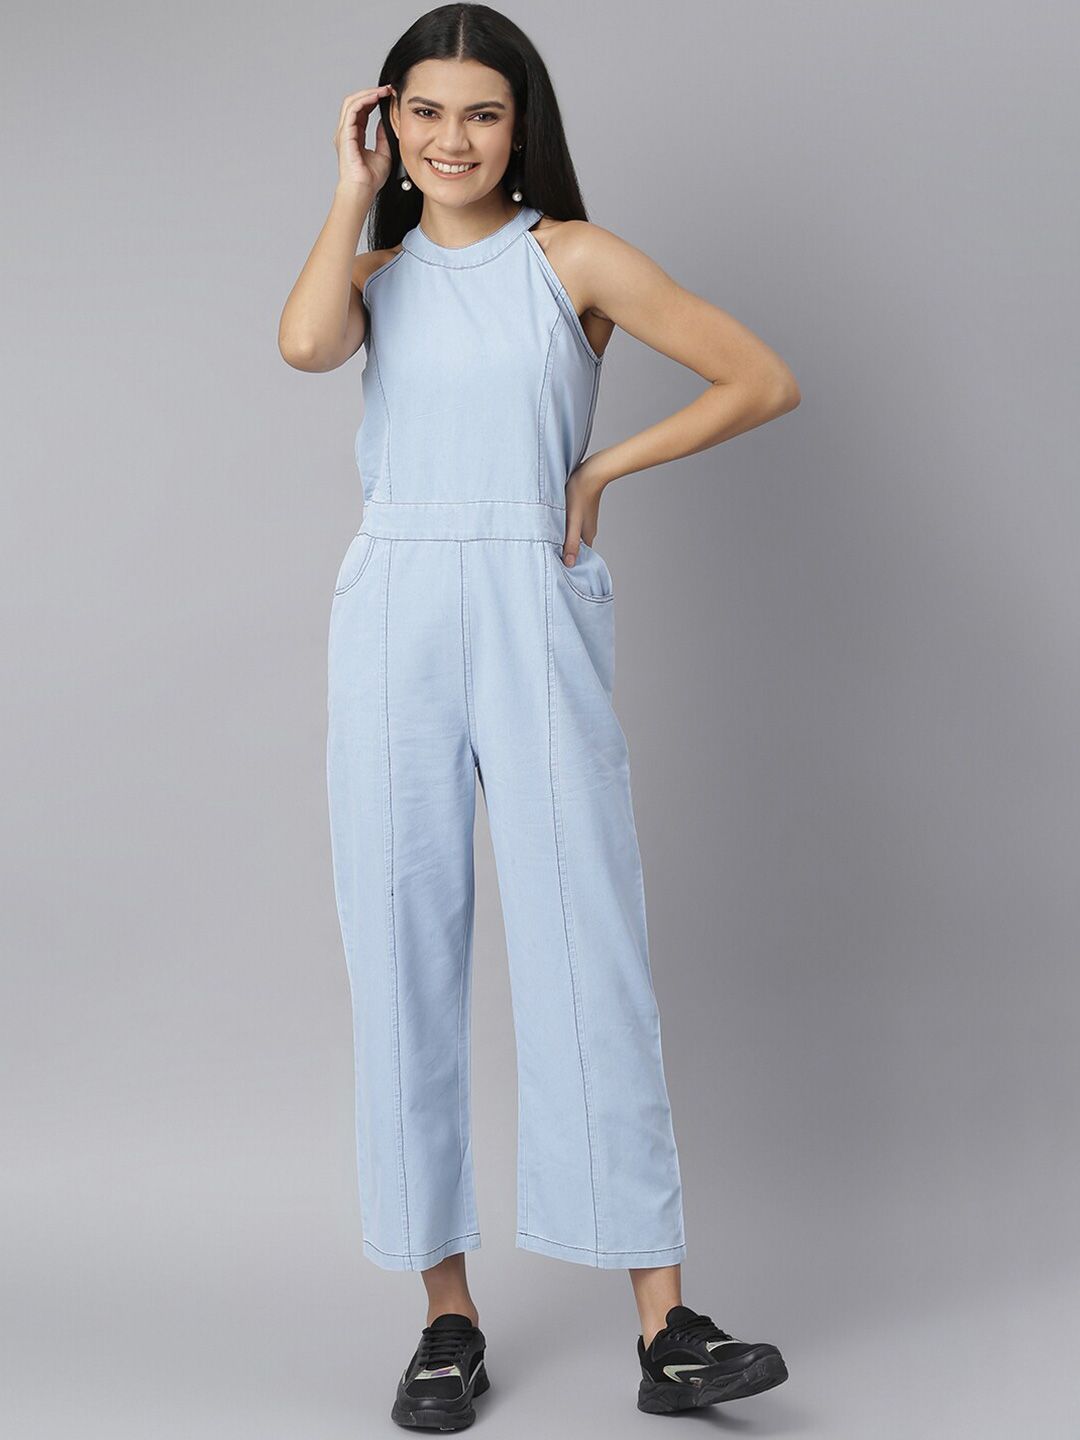 StyleStone Blue Denim Basic Jumpsuit Price in India